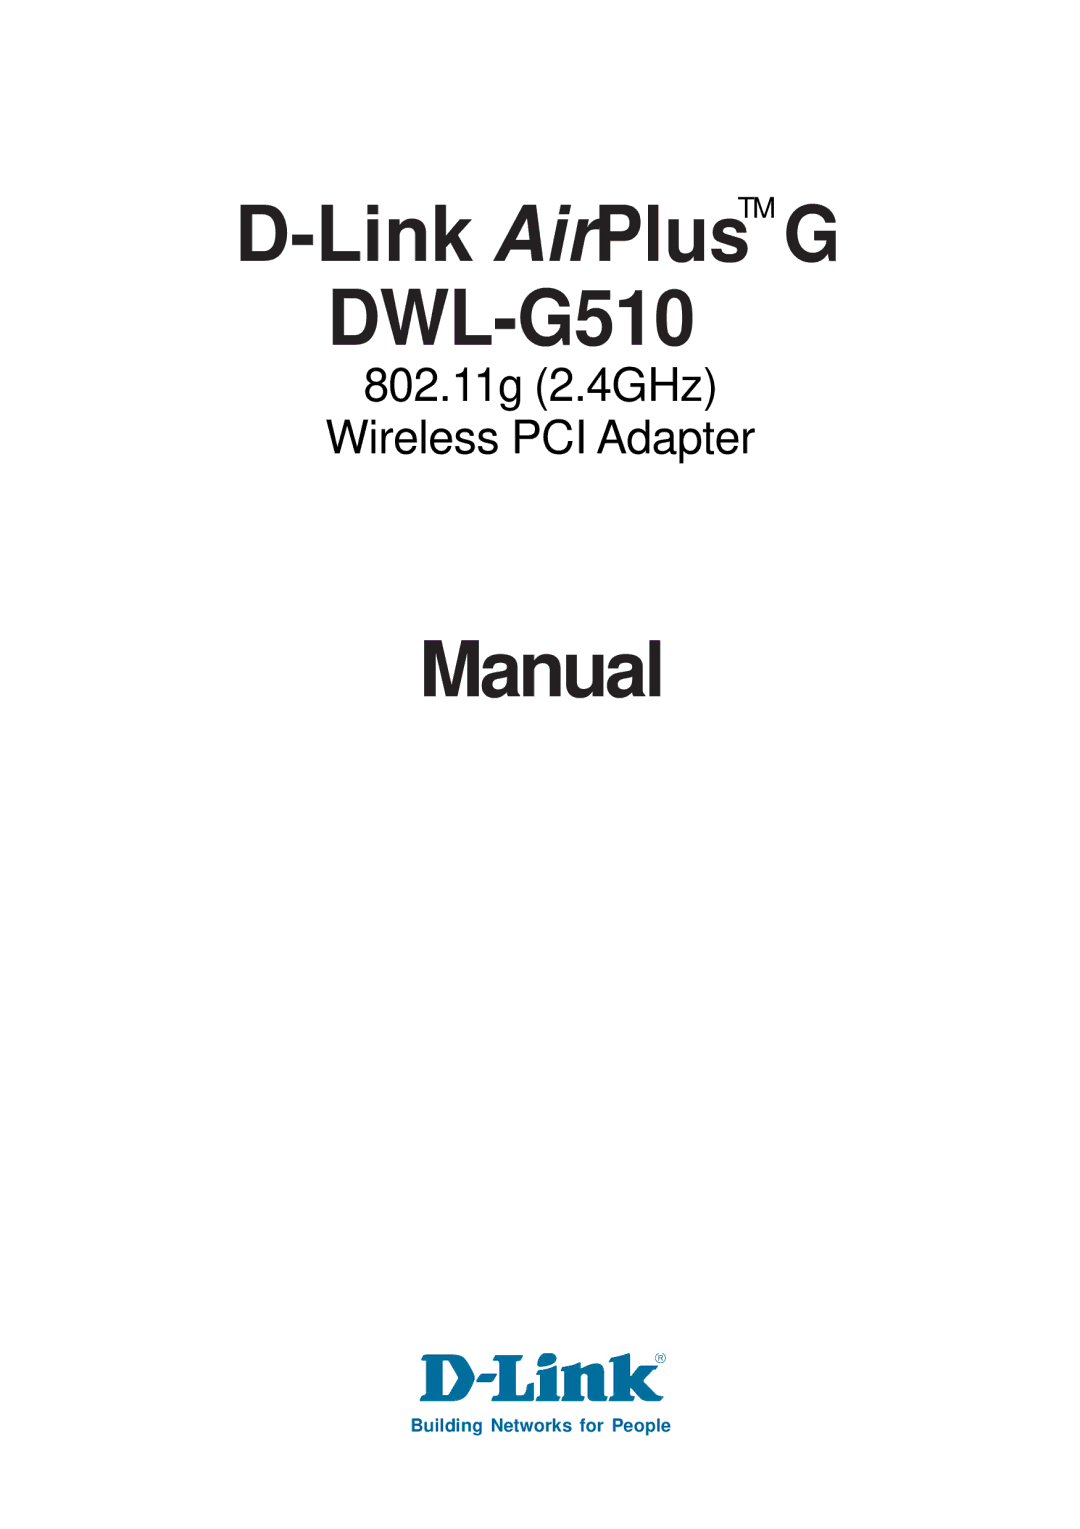 D-Link manual Link AirPlusTM G DWL-G510 